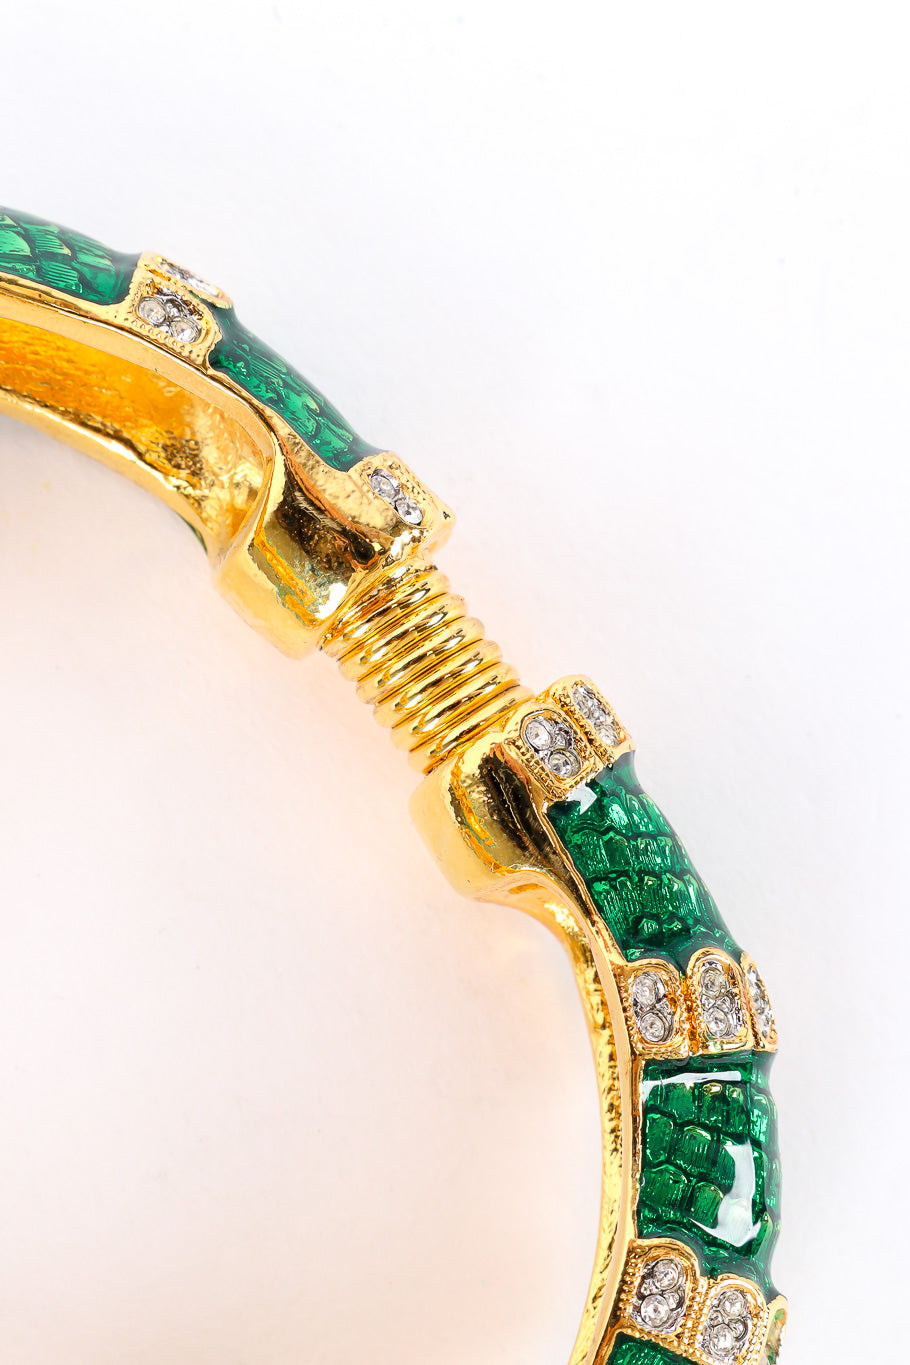 Dragon bracelet by Kenneth Jay Lane on white background spring clasp @recessla